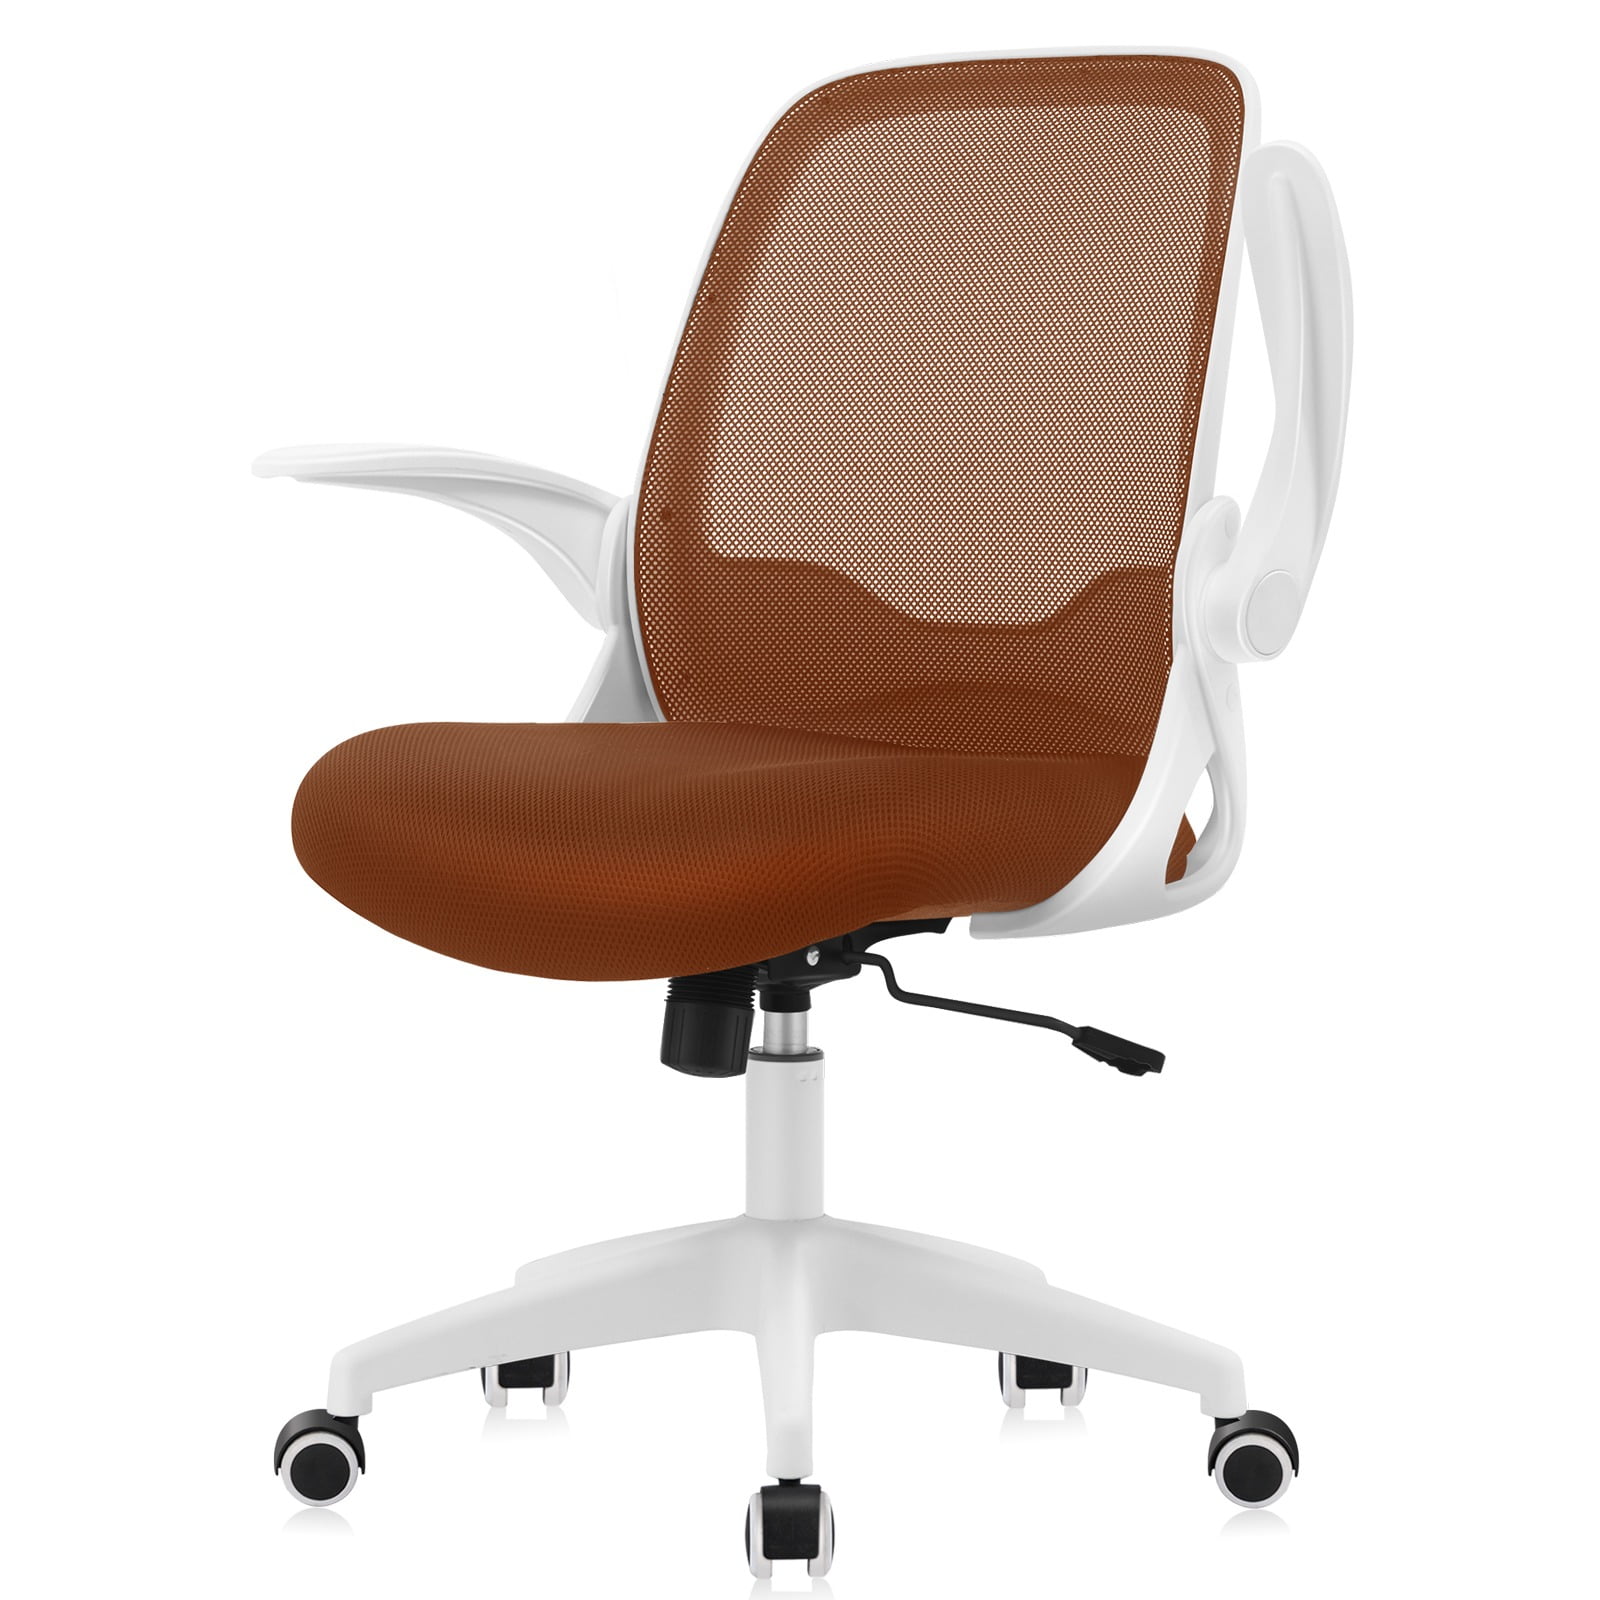 KERDOM Ergonomic Office Chair, Home Desk Chair, Comfy Breathable